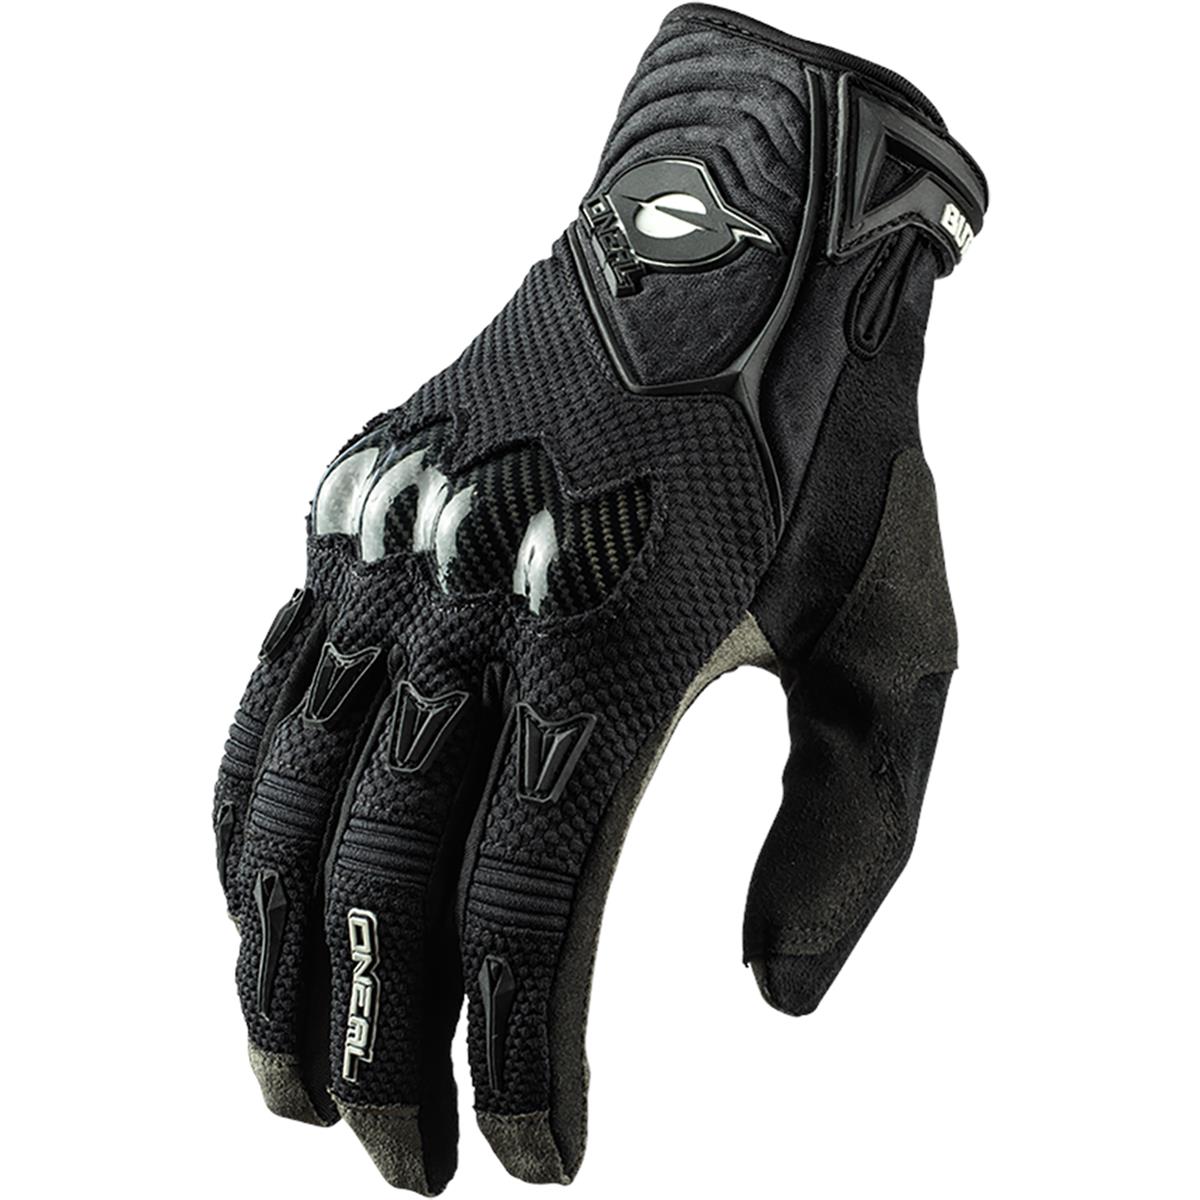 O'Neal Gloves Butch Carbon - Black